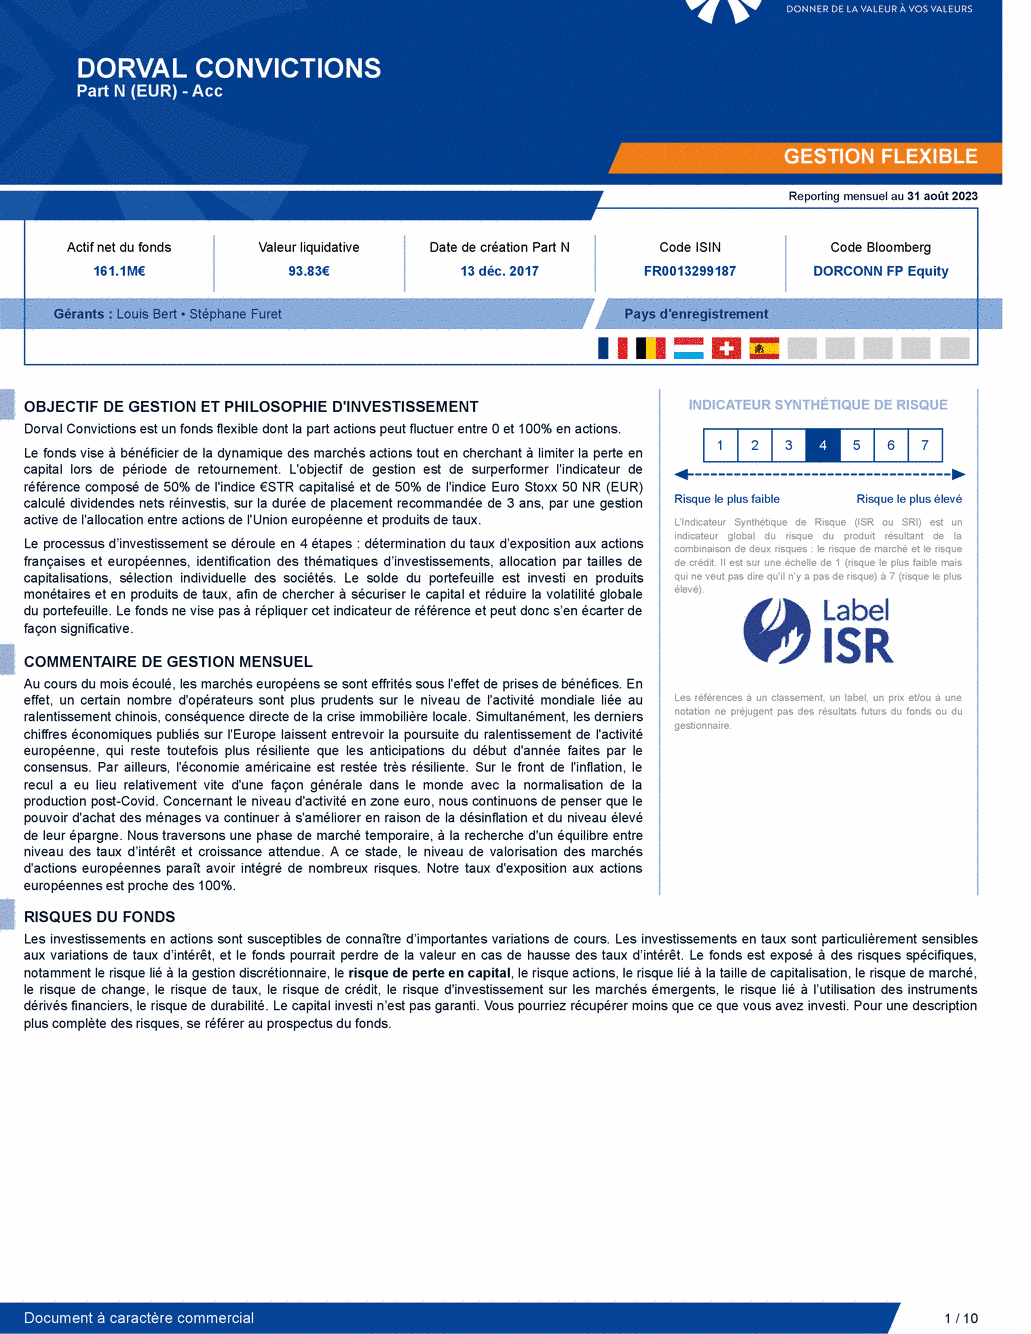 Reporting DORVAL CONVICTIONS N - 31/08/2023 - Français